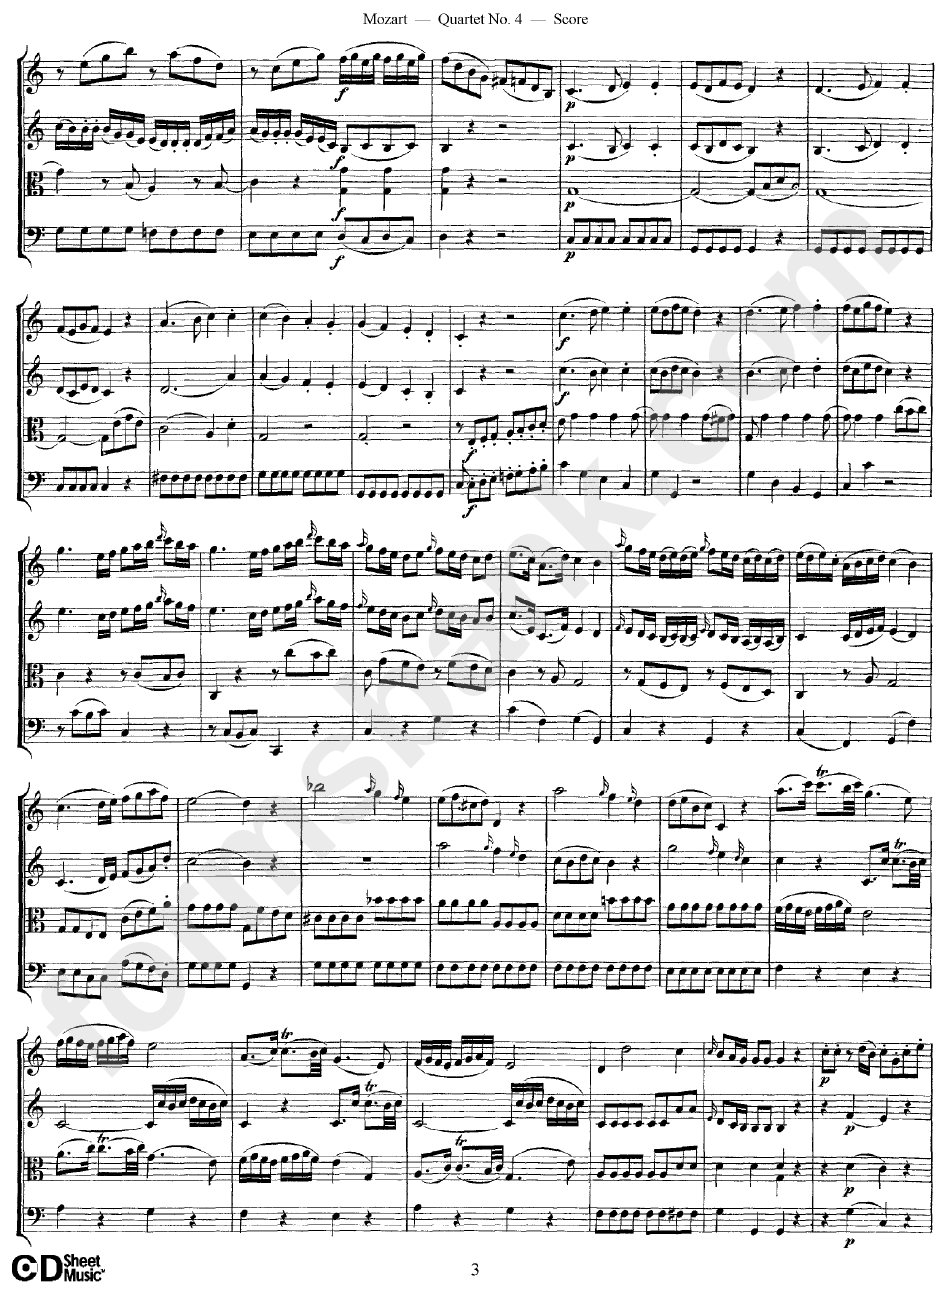 Mozart - Quarter No. 4 In C Major K. 157 - Sheet Music